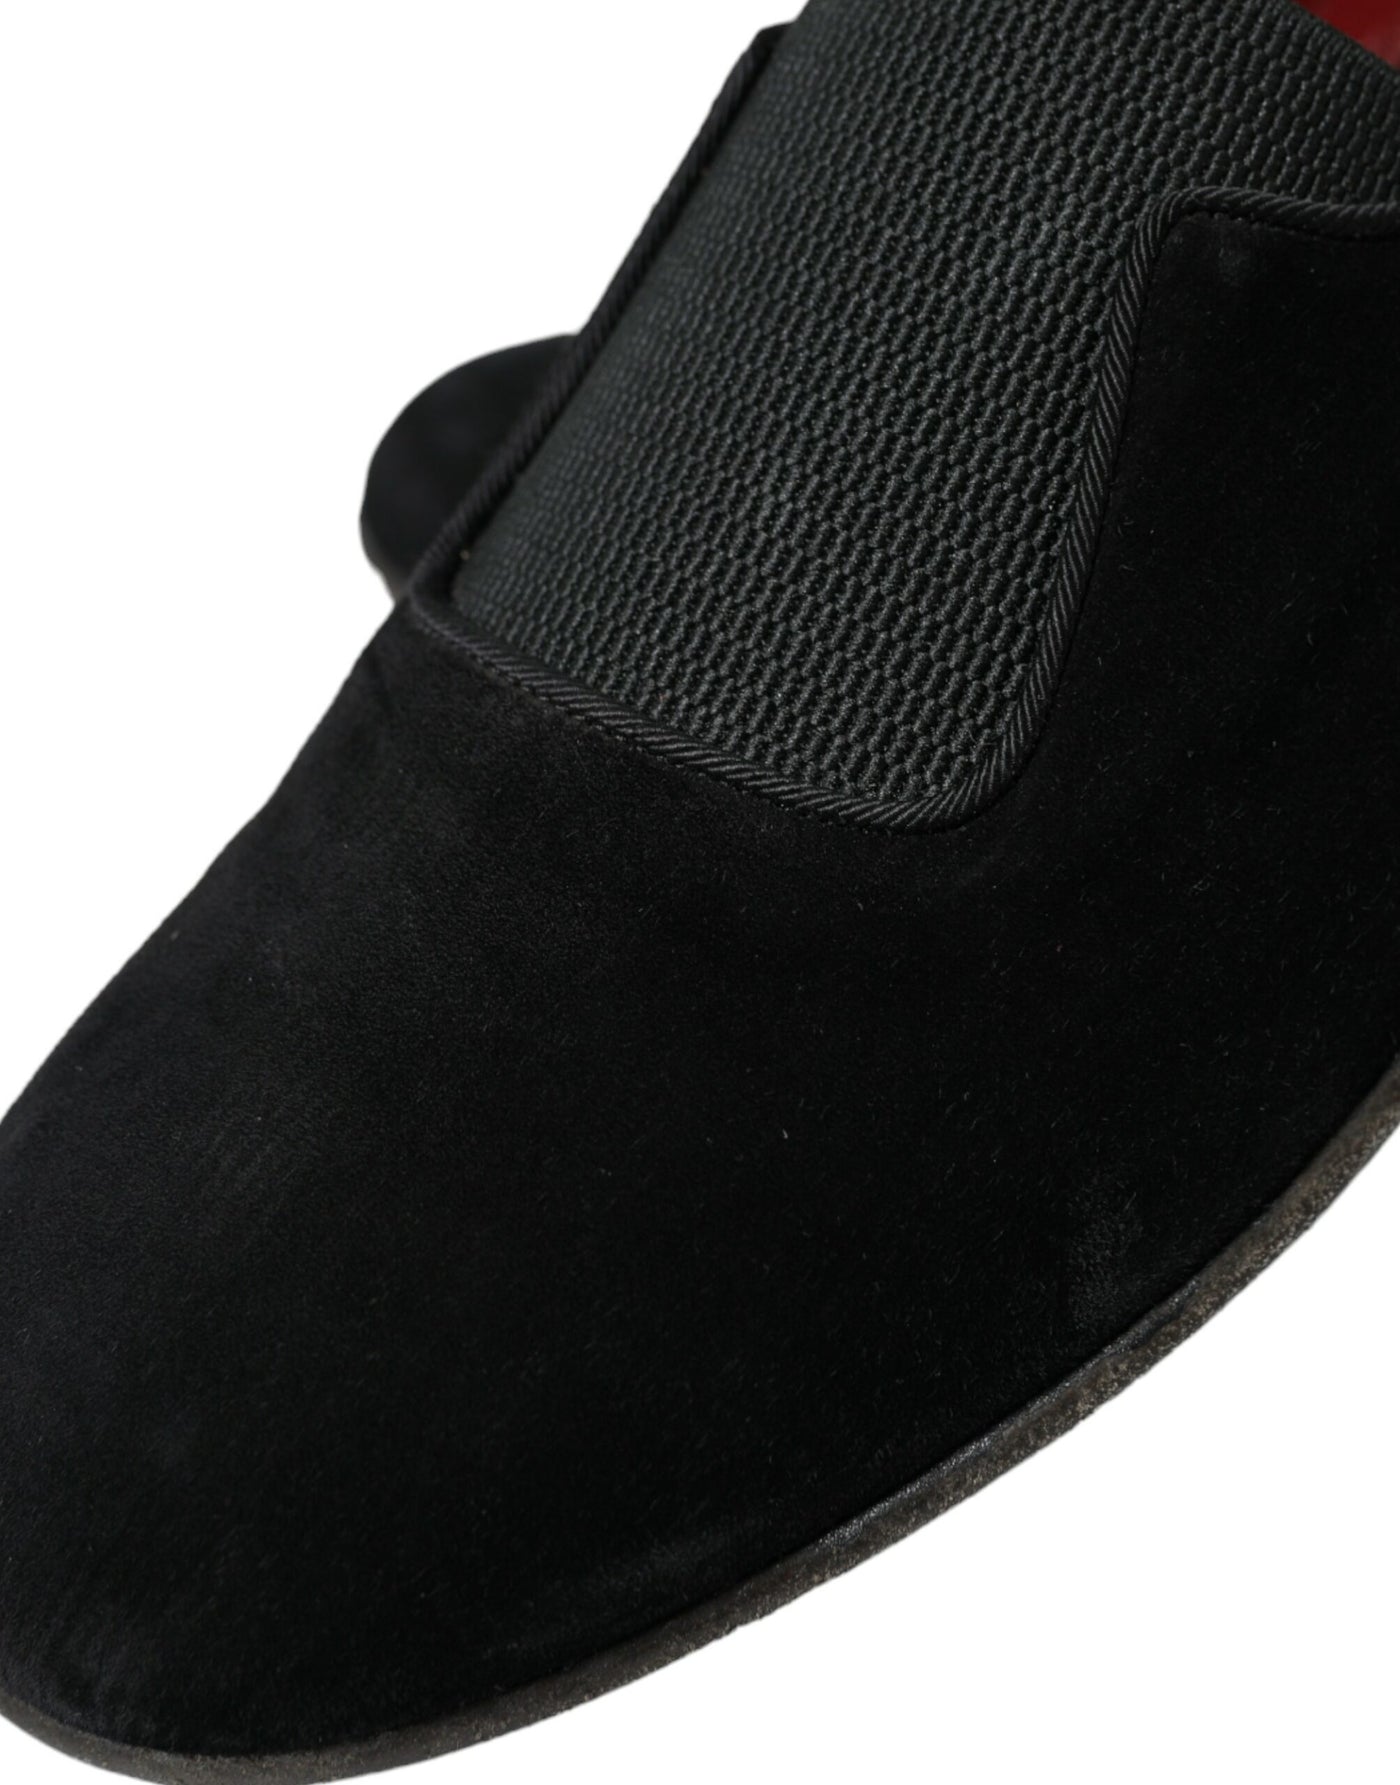 Dolce & Gabbana Black RUNWAY Velour AMALFI Loafers Shoes